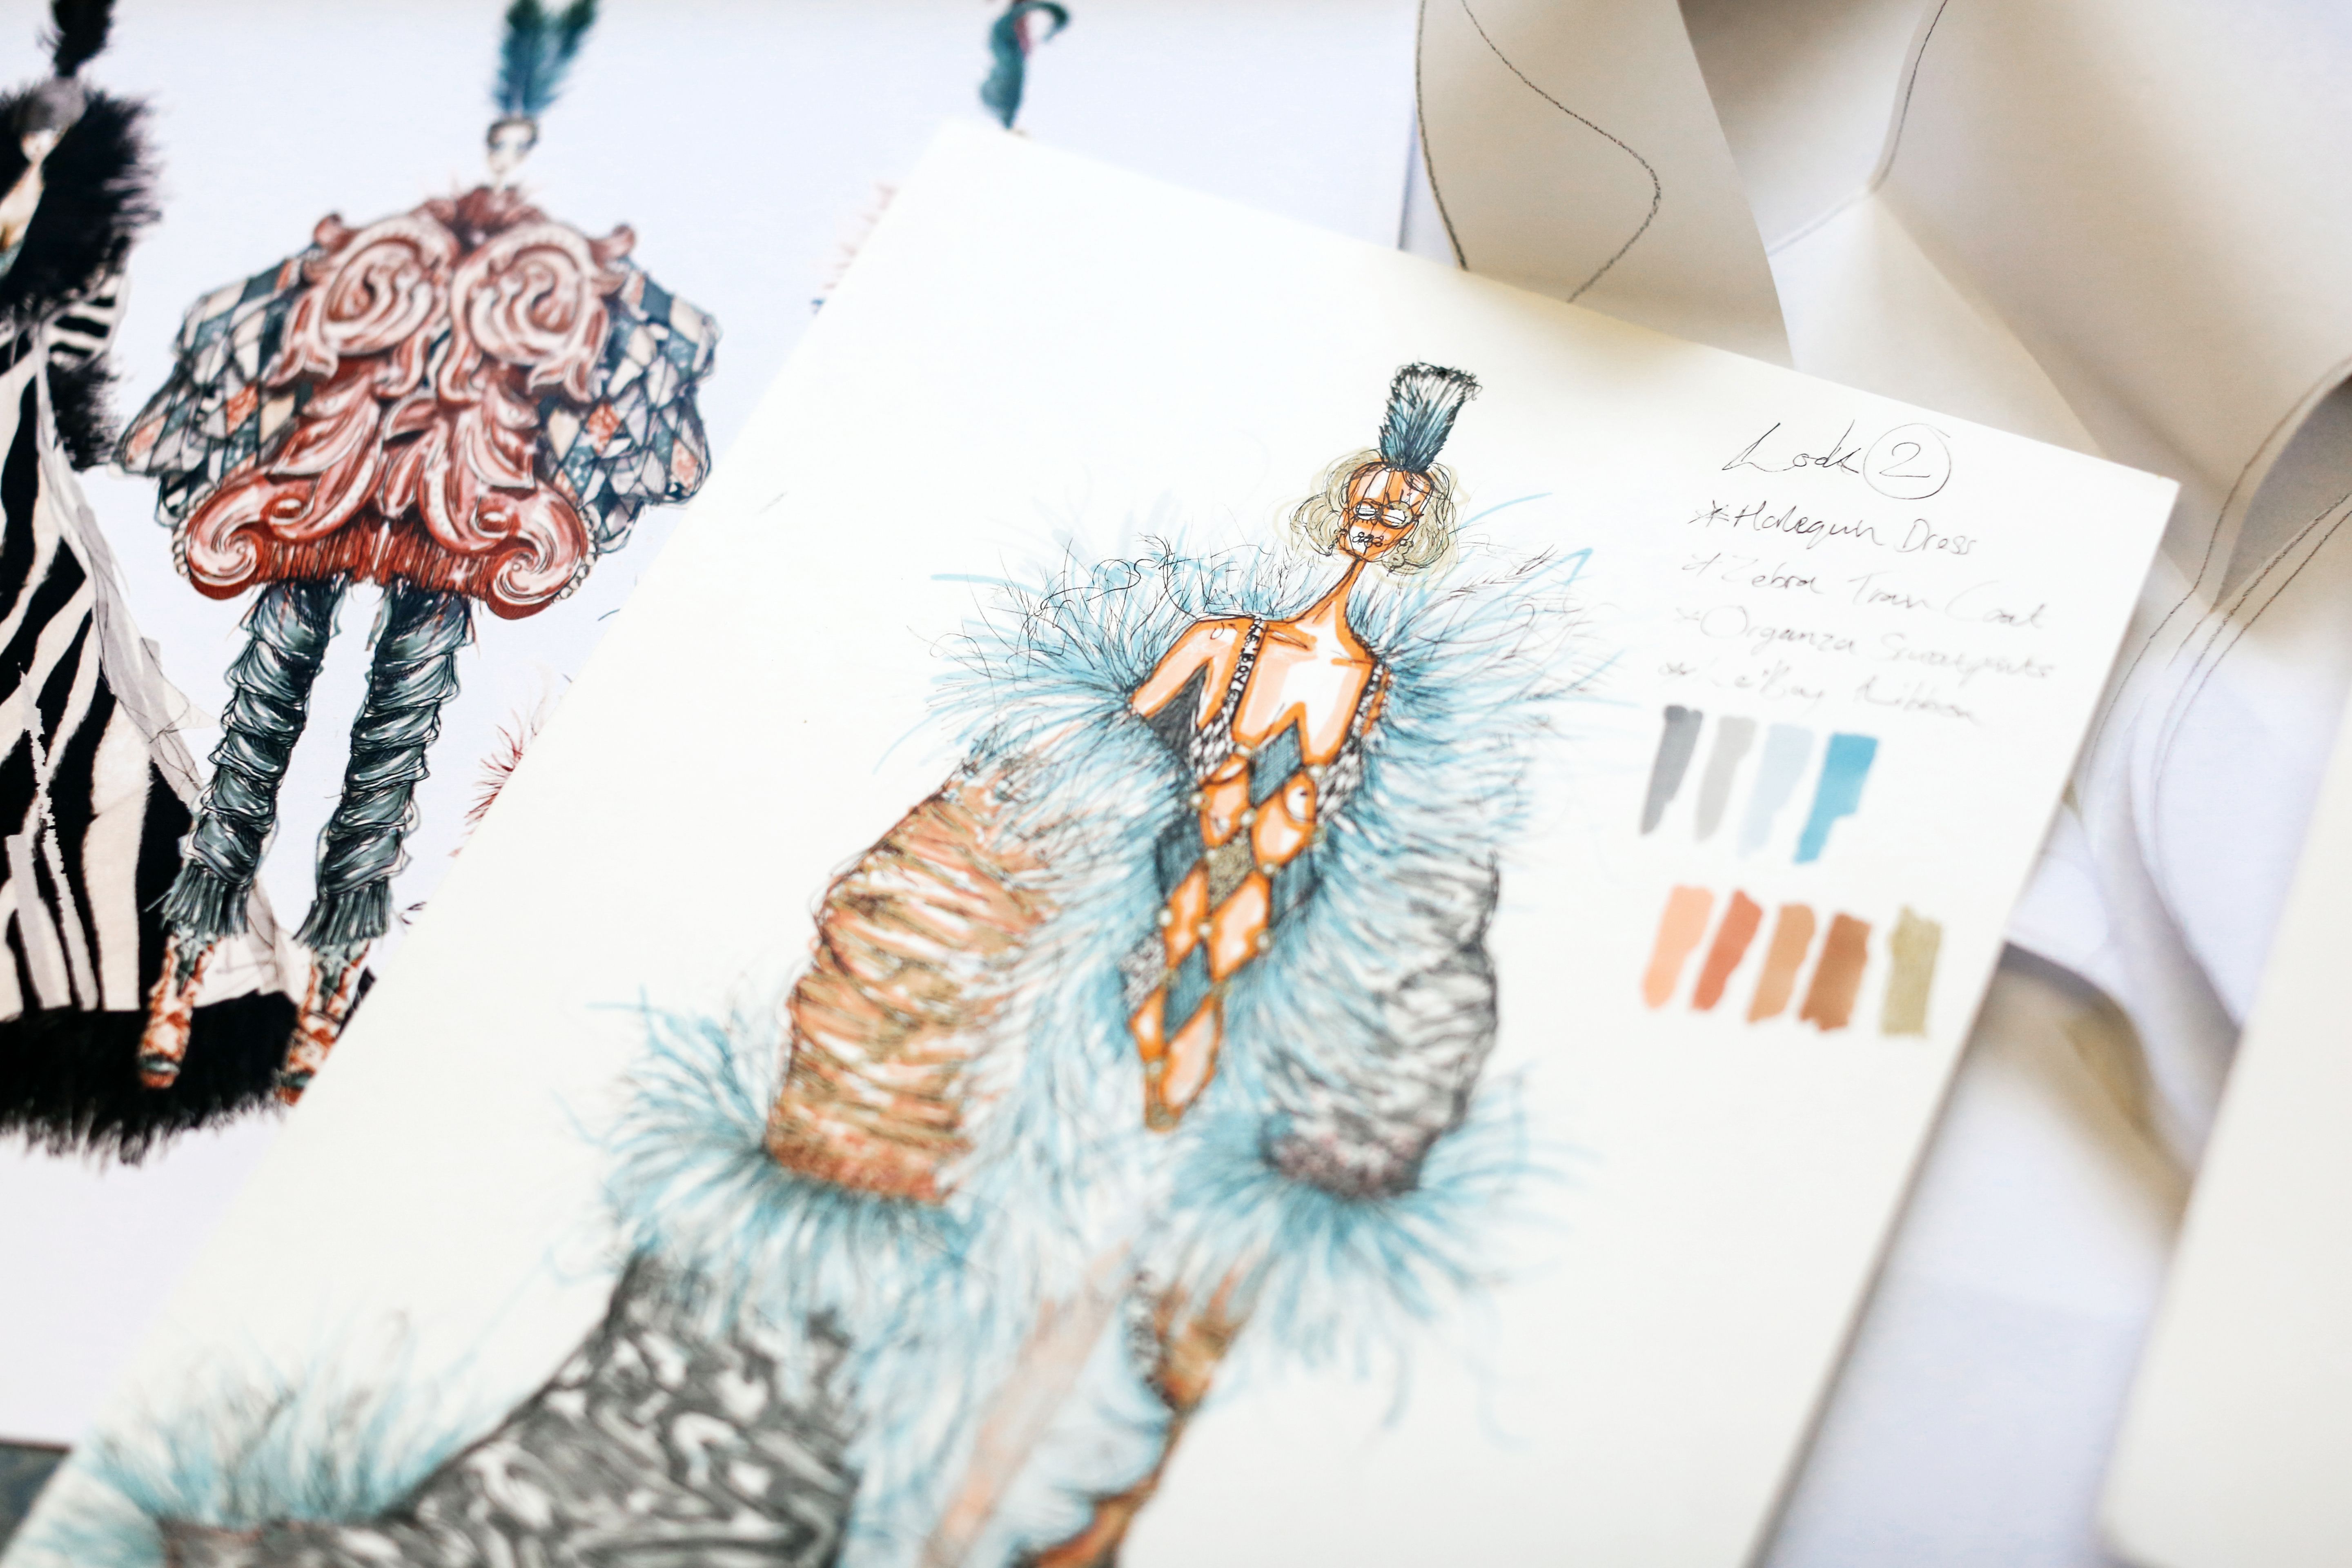 justice designer sketchbook 4 in 1 fashion portfolio